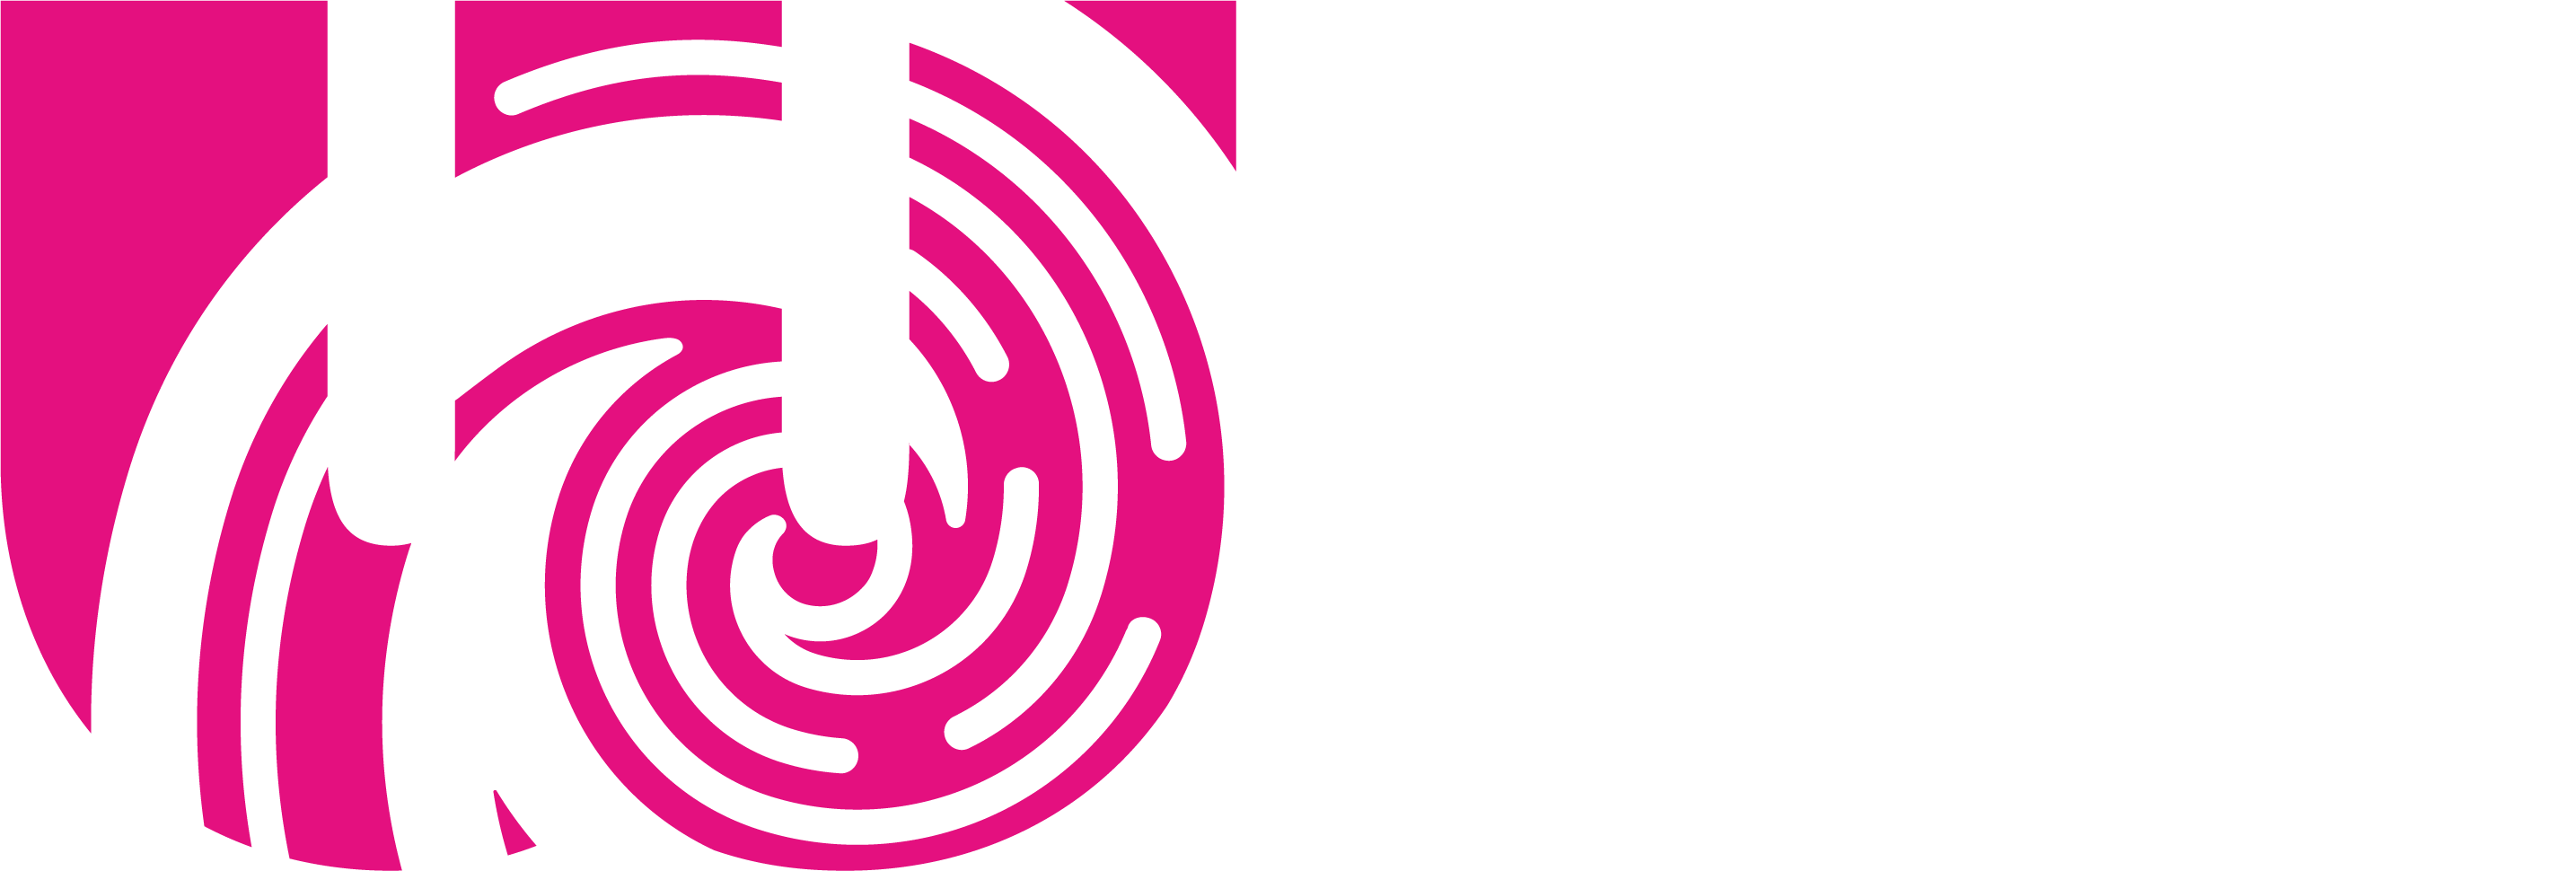 Wholesale Hub Logo White